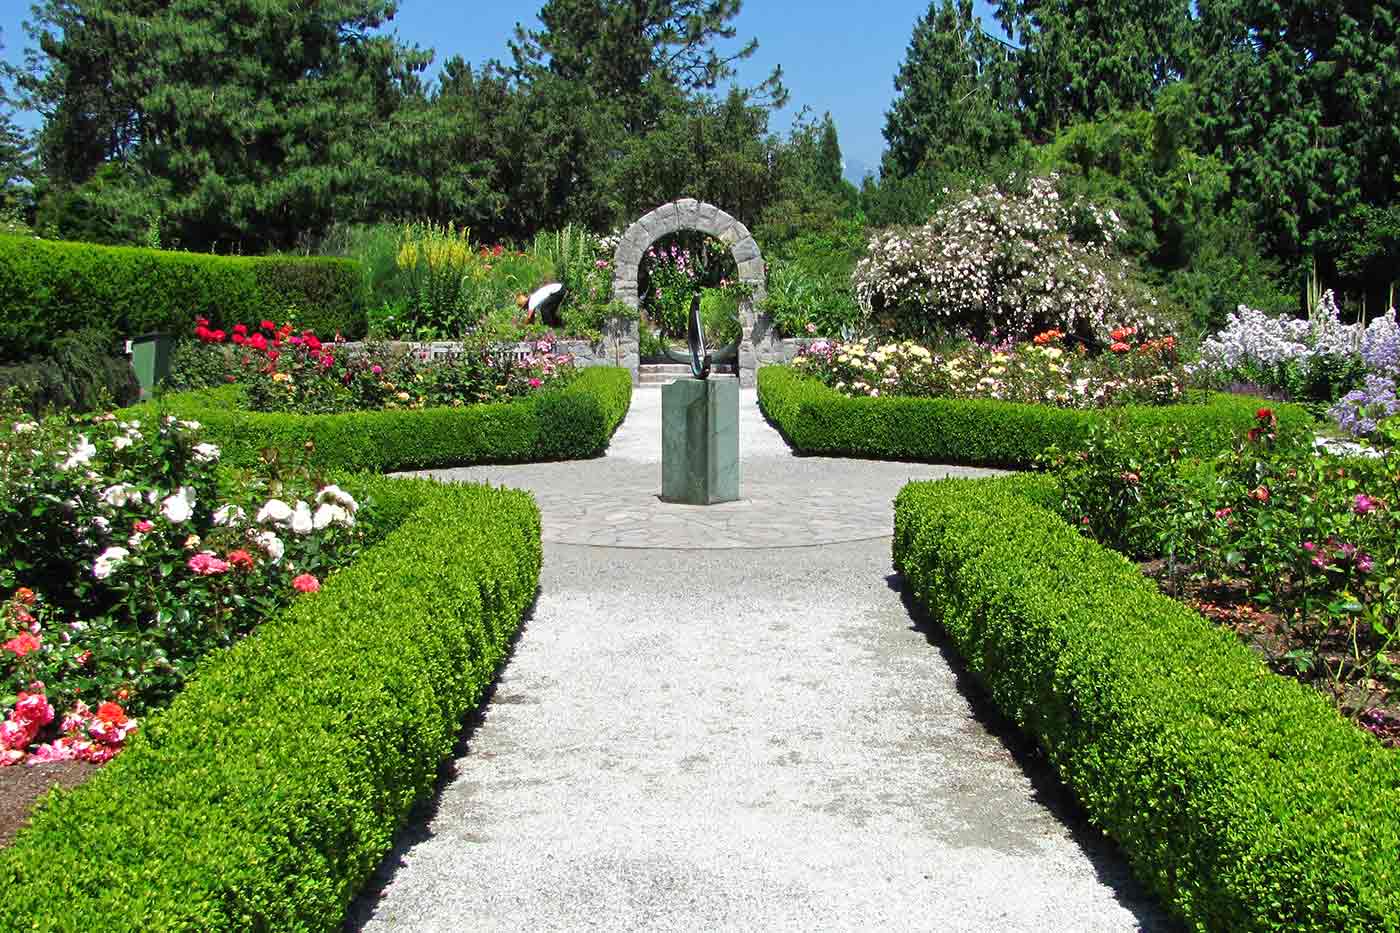 VanDusen Botanical Gardens